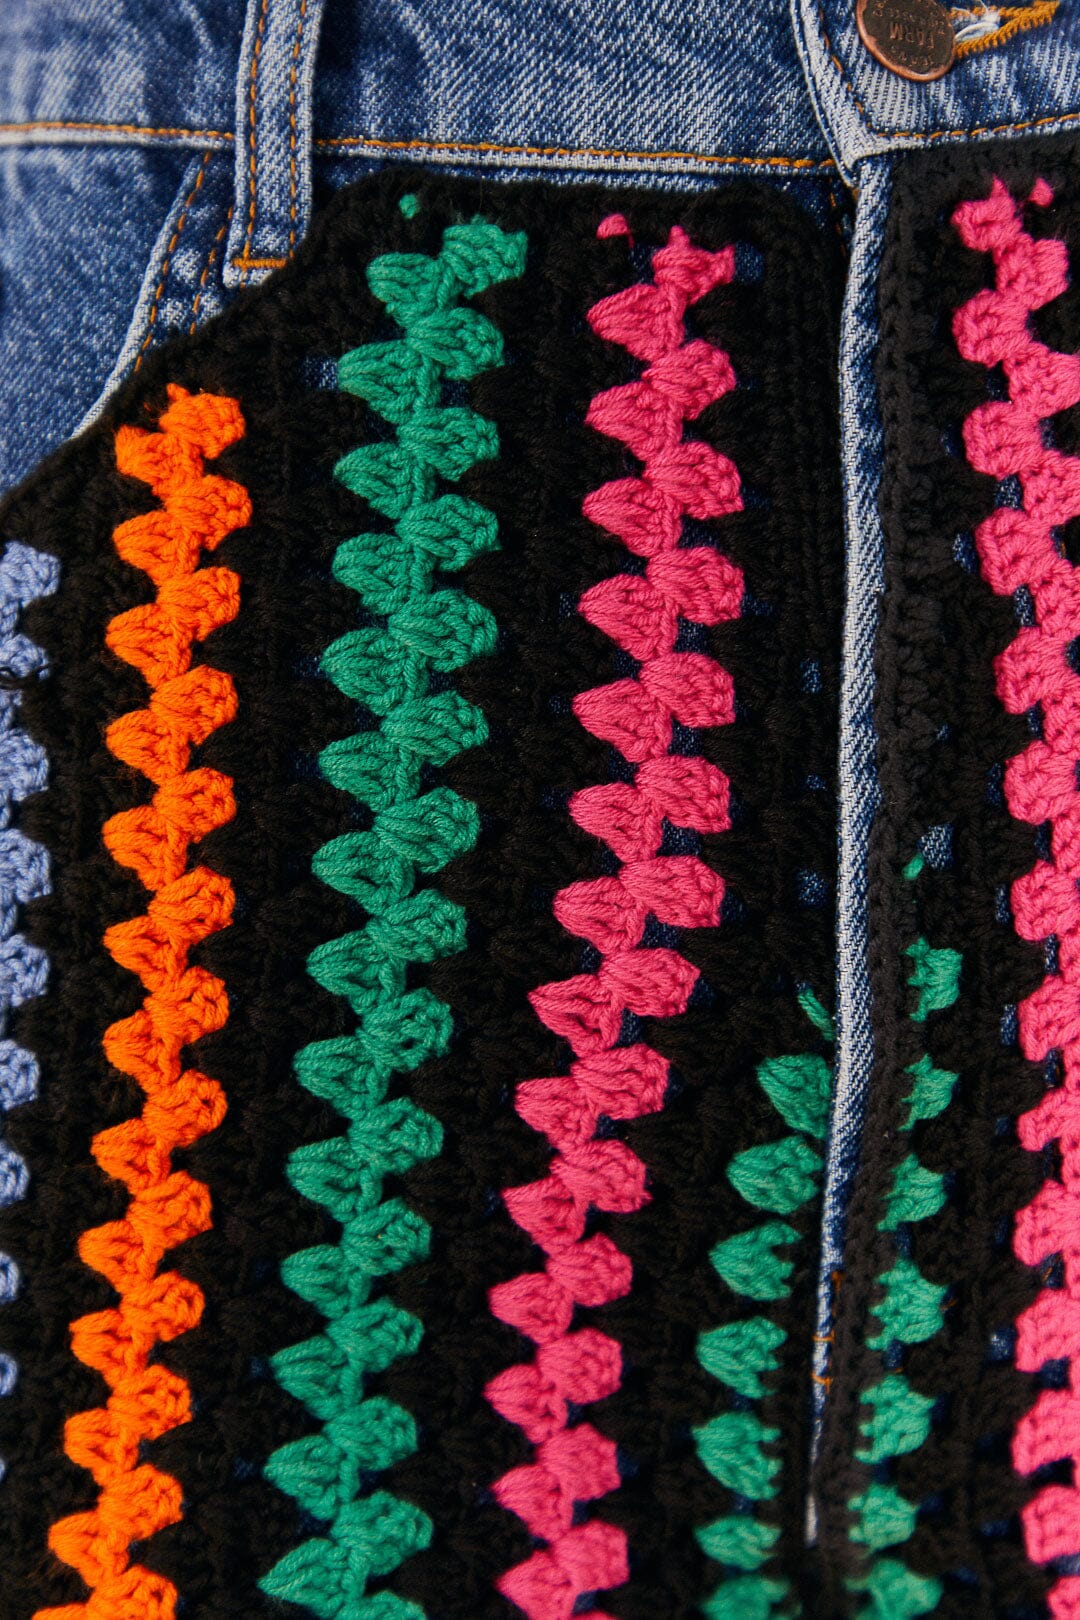 Crochet Denim Shorts